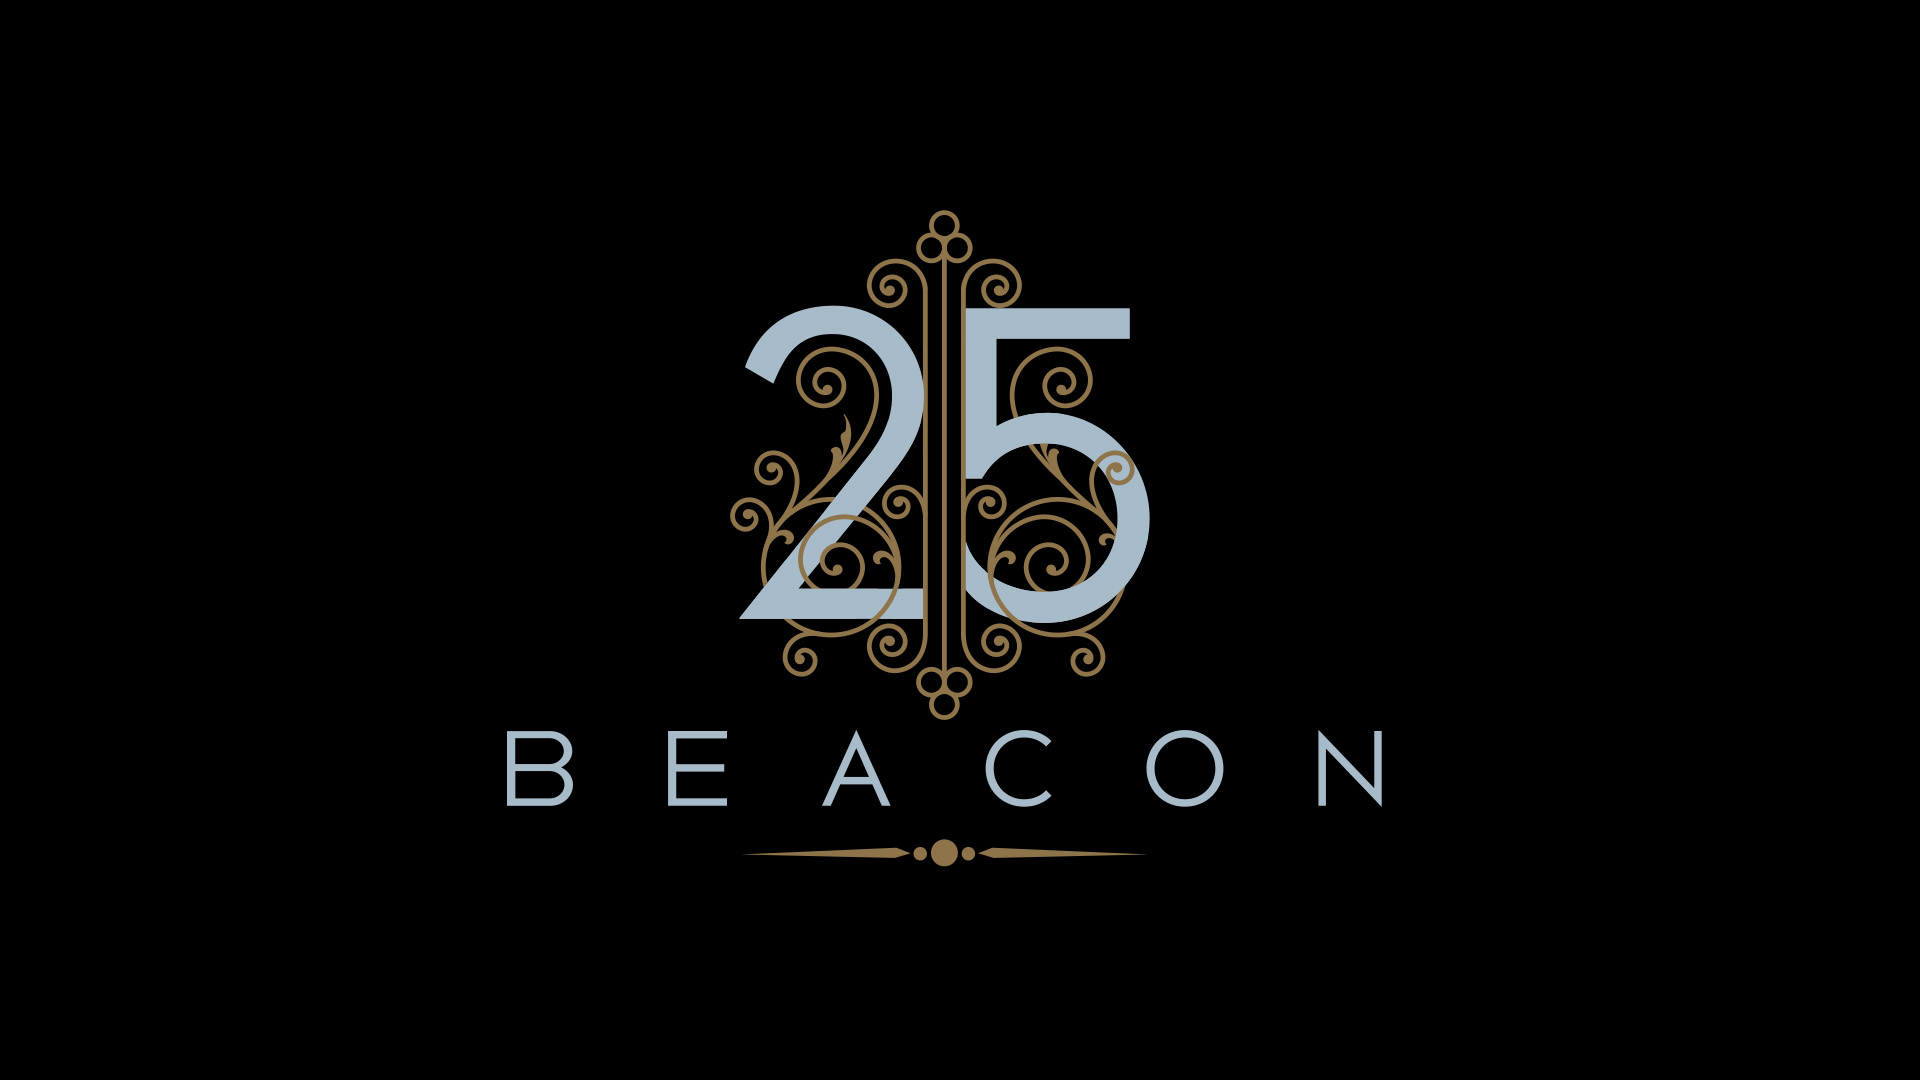 25 Beacon identity logo on black